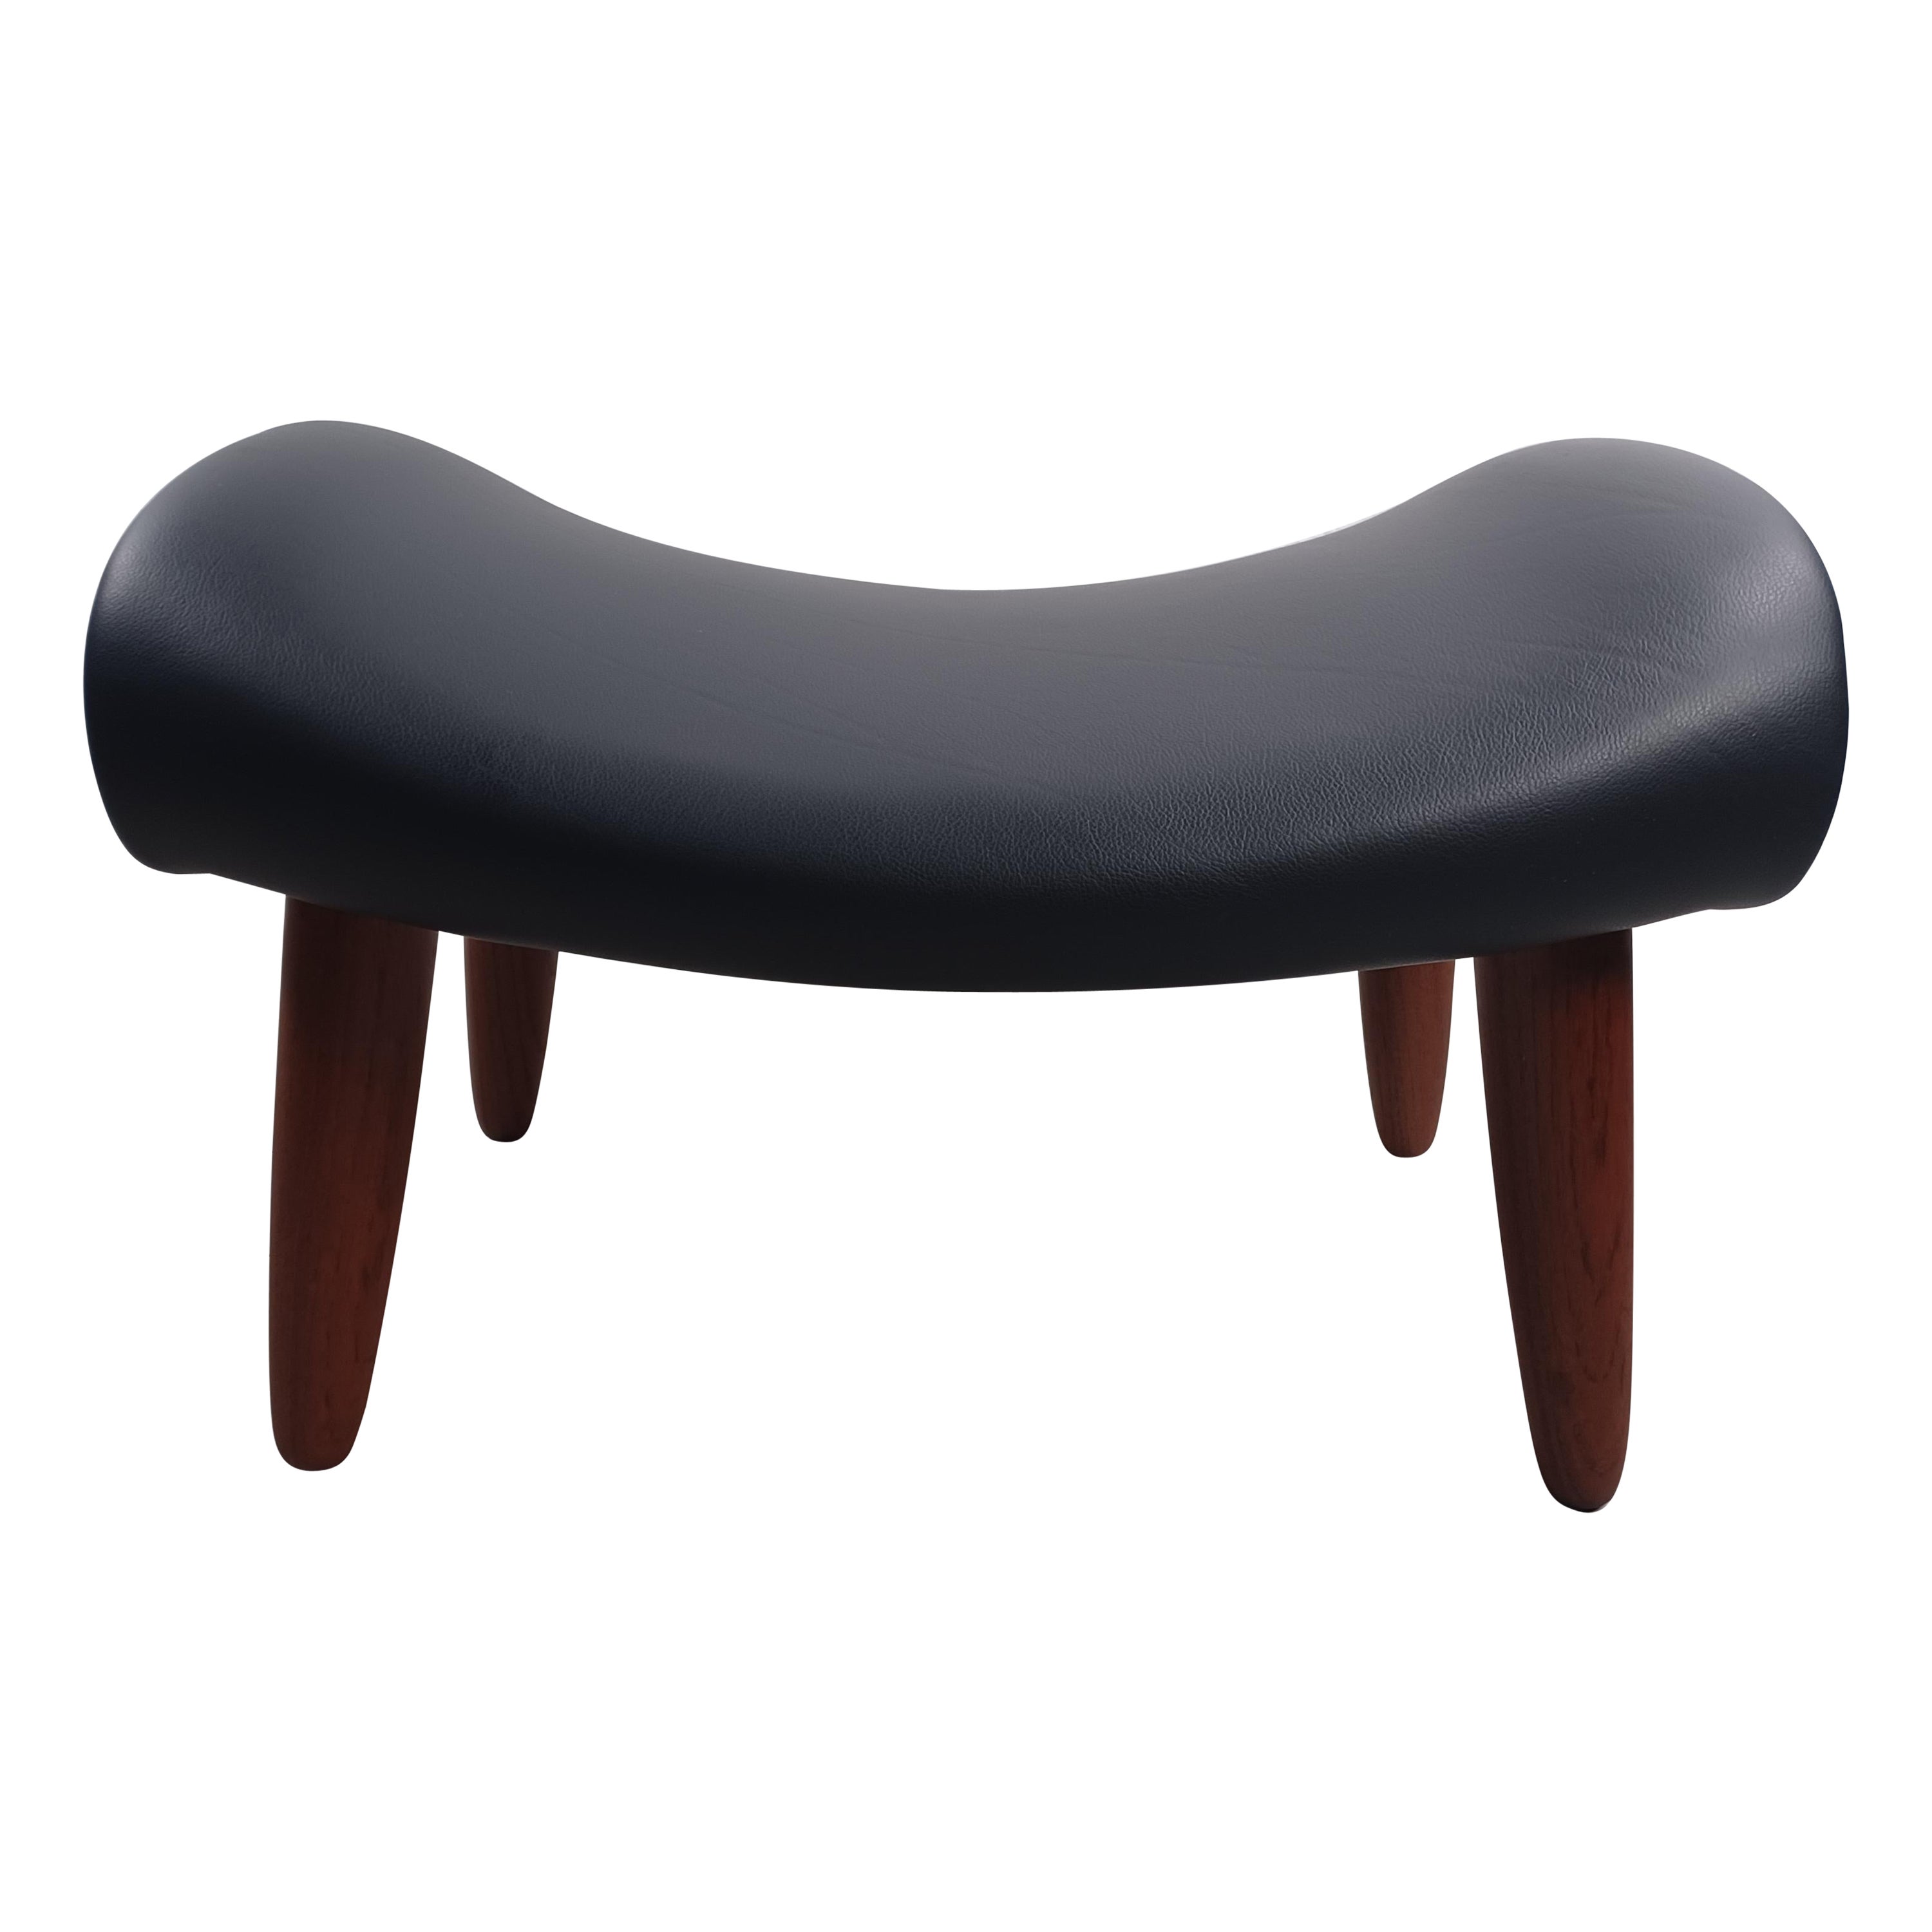 1960´s Fully restored Danish Footstool in Teak Reupholstered in Black Leather